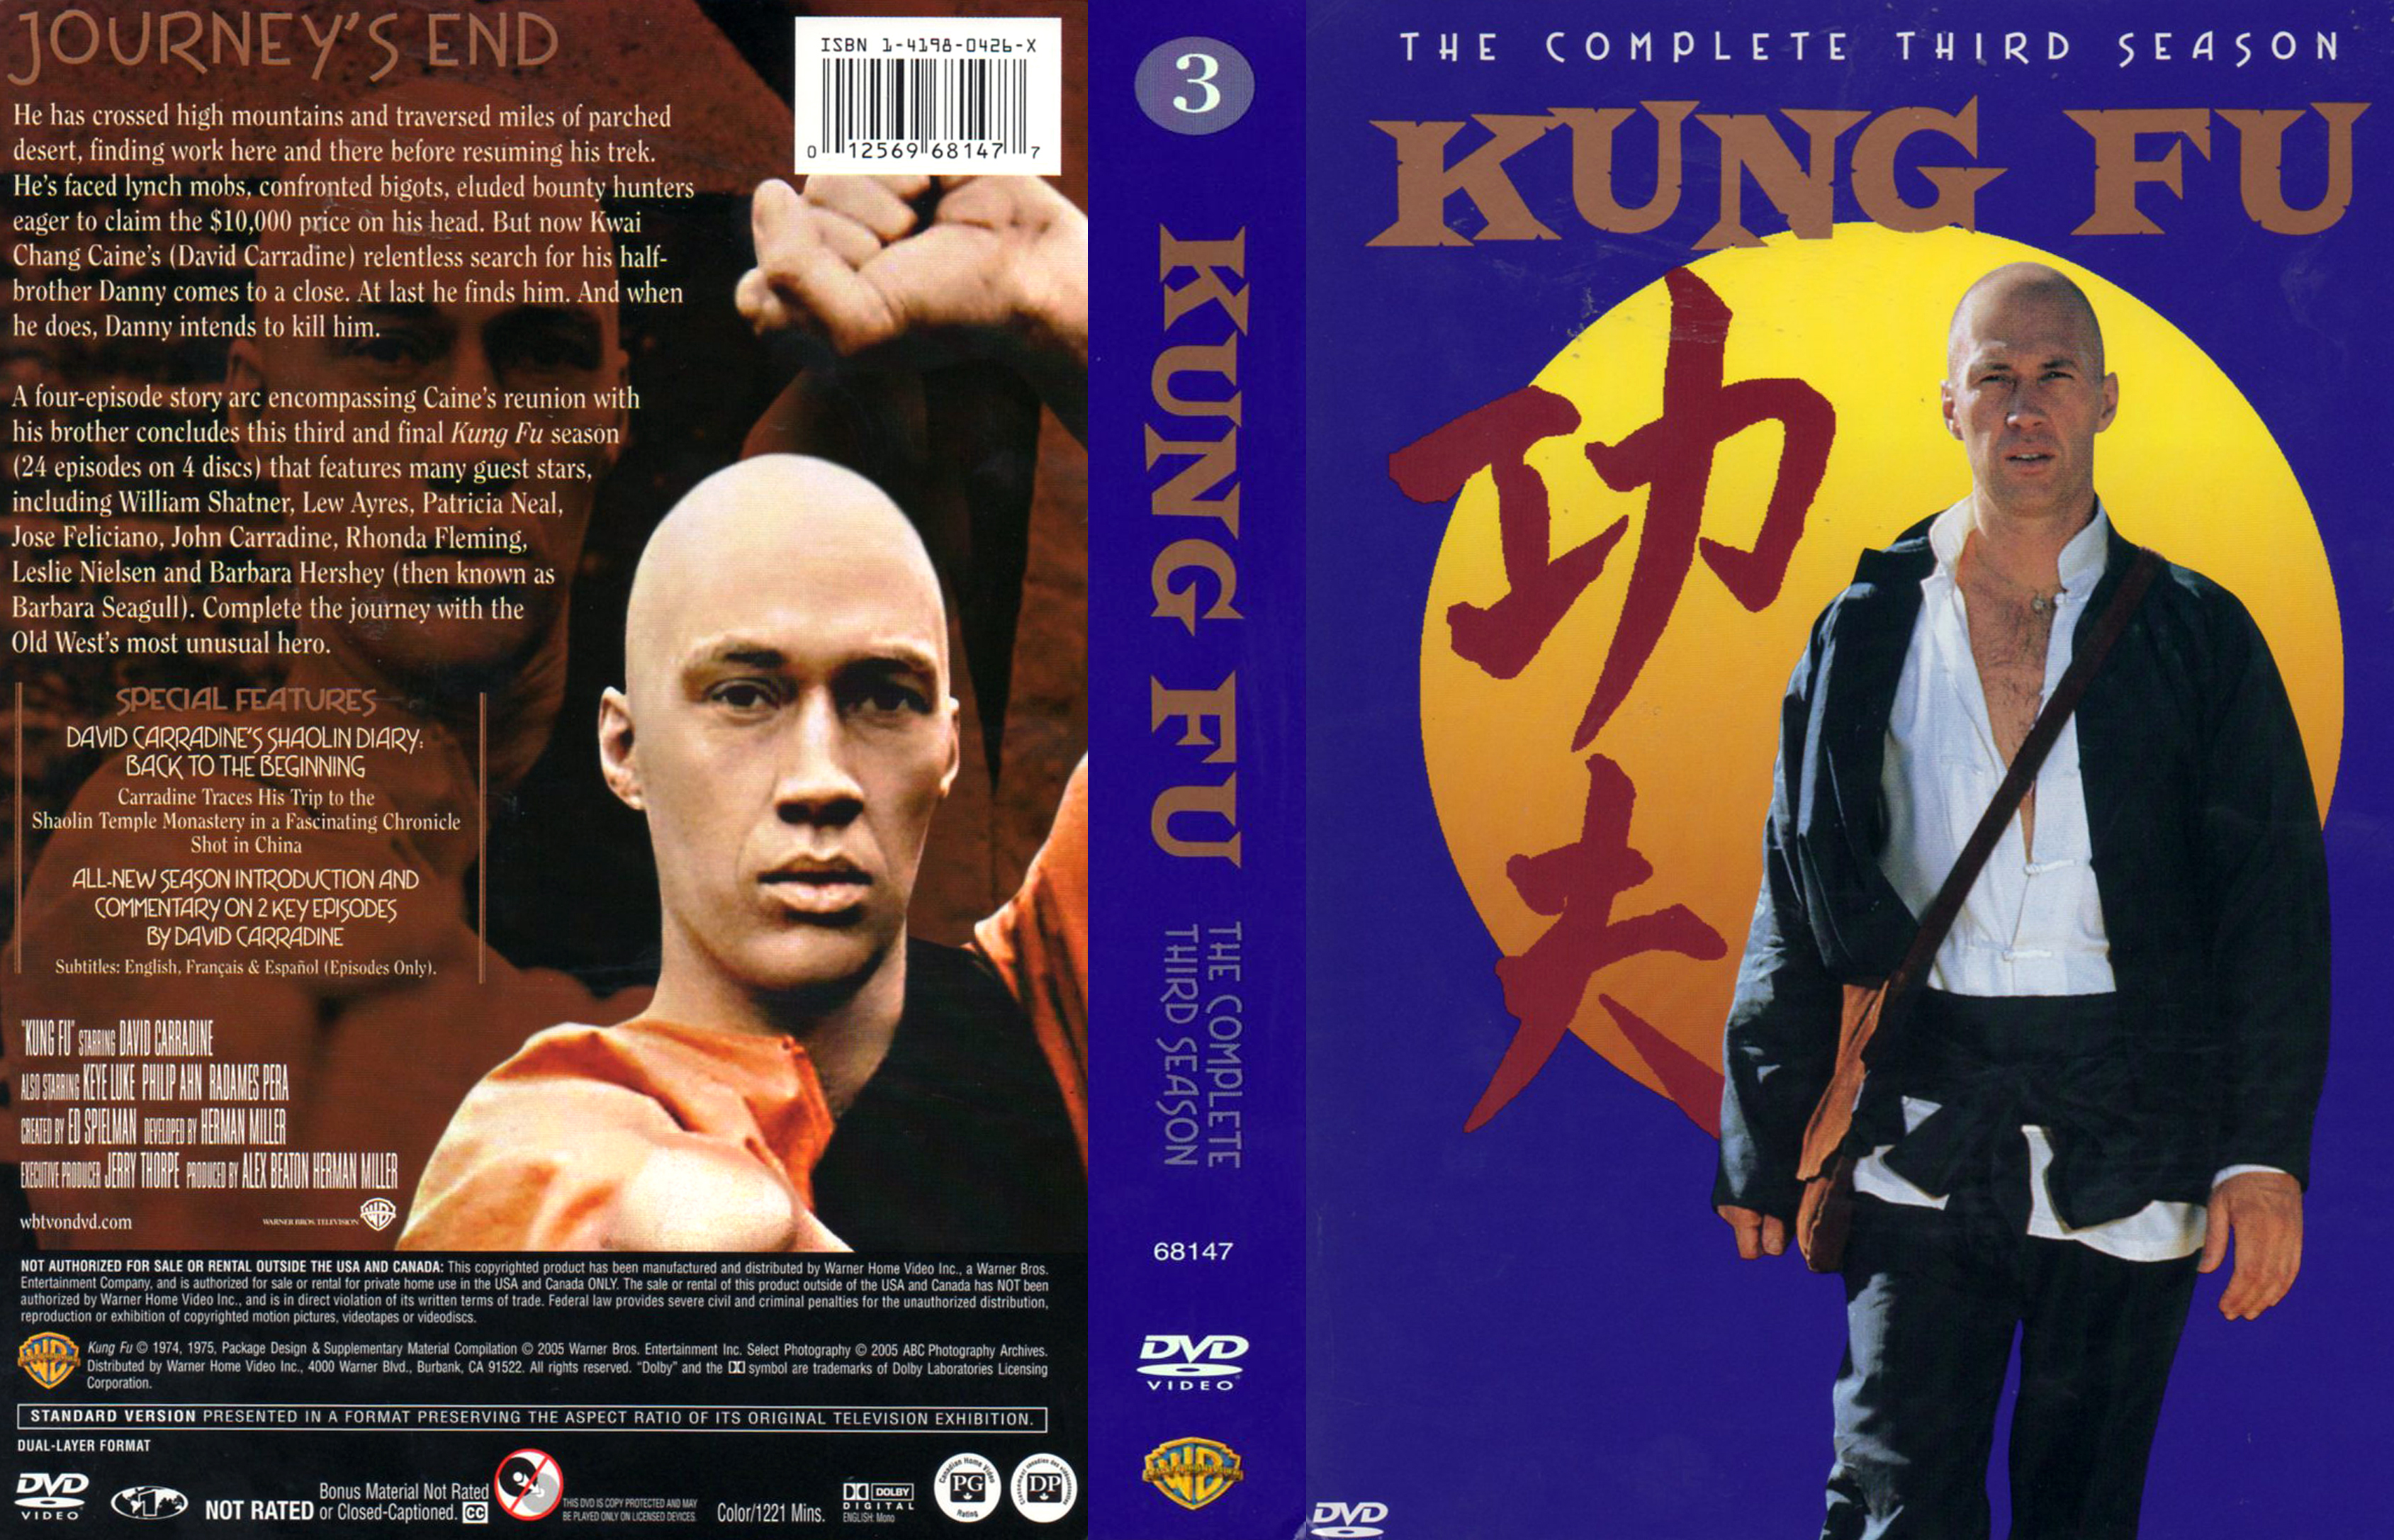 Jaquette DVD Kung fu saison 3 Zone 1